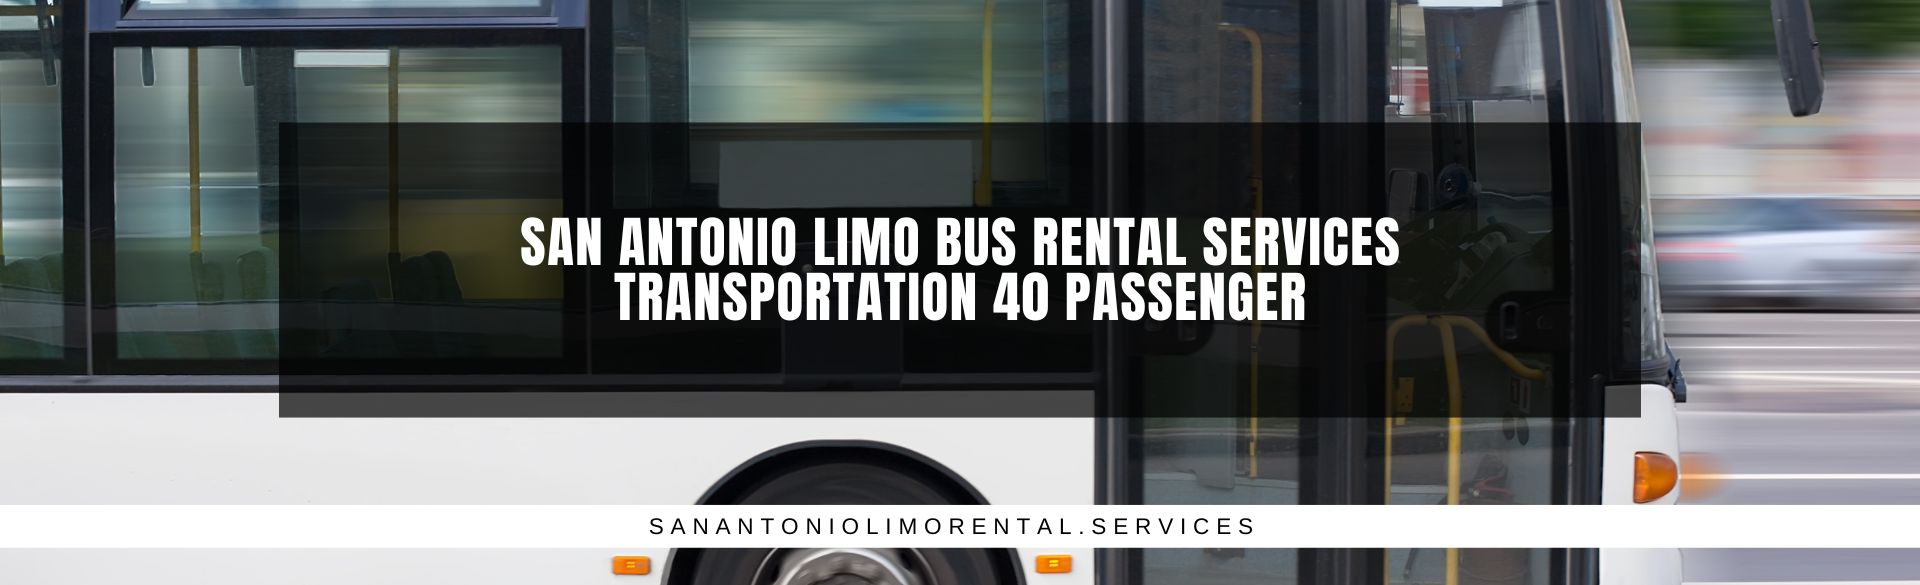 San Antonio Limo Bus Rental Services Transportation 40 Passenger